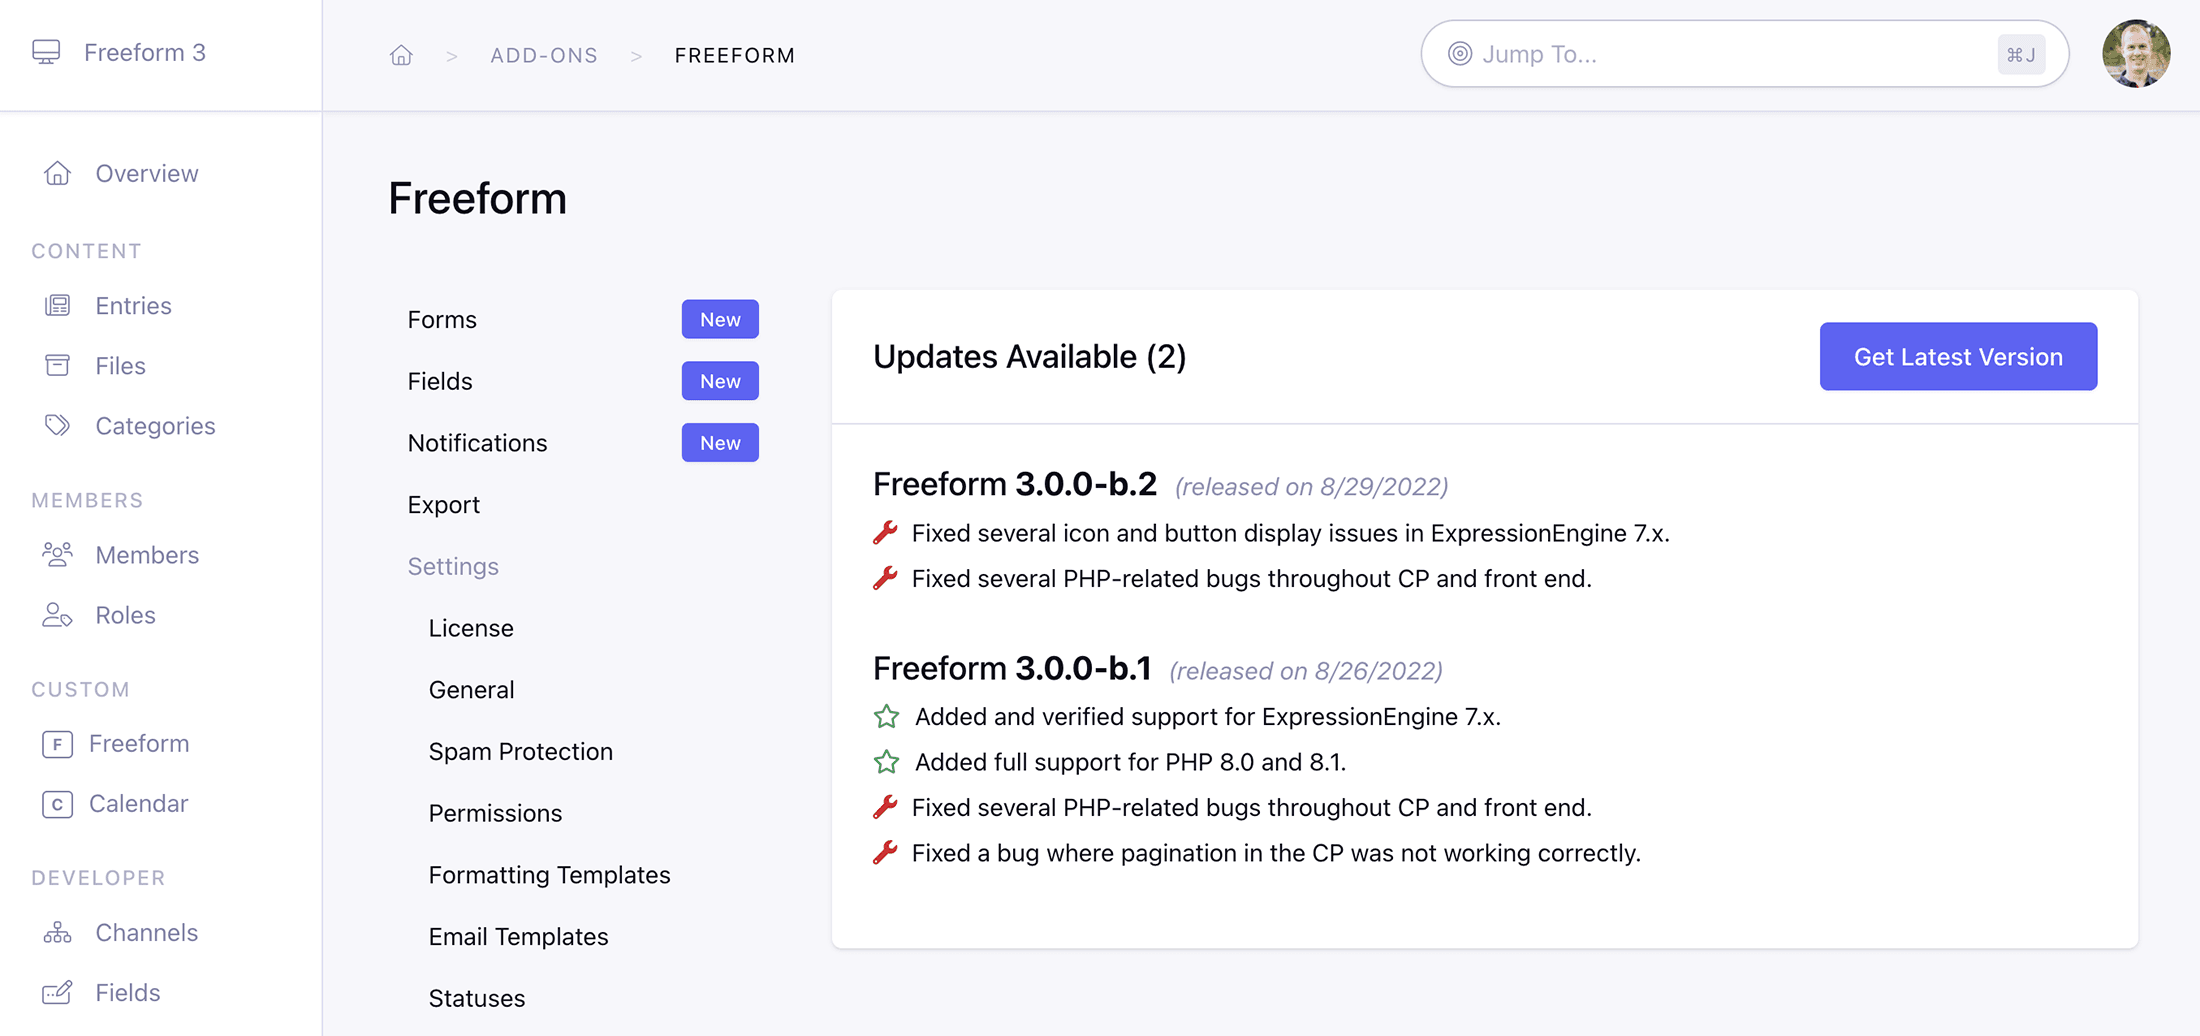 Freeform's Built in Update Service